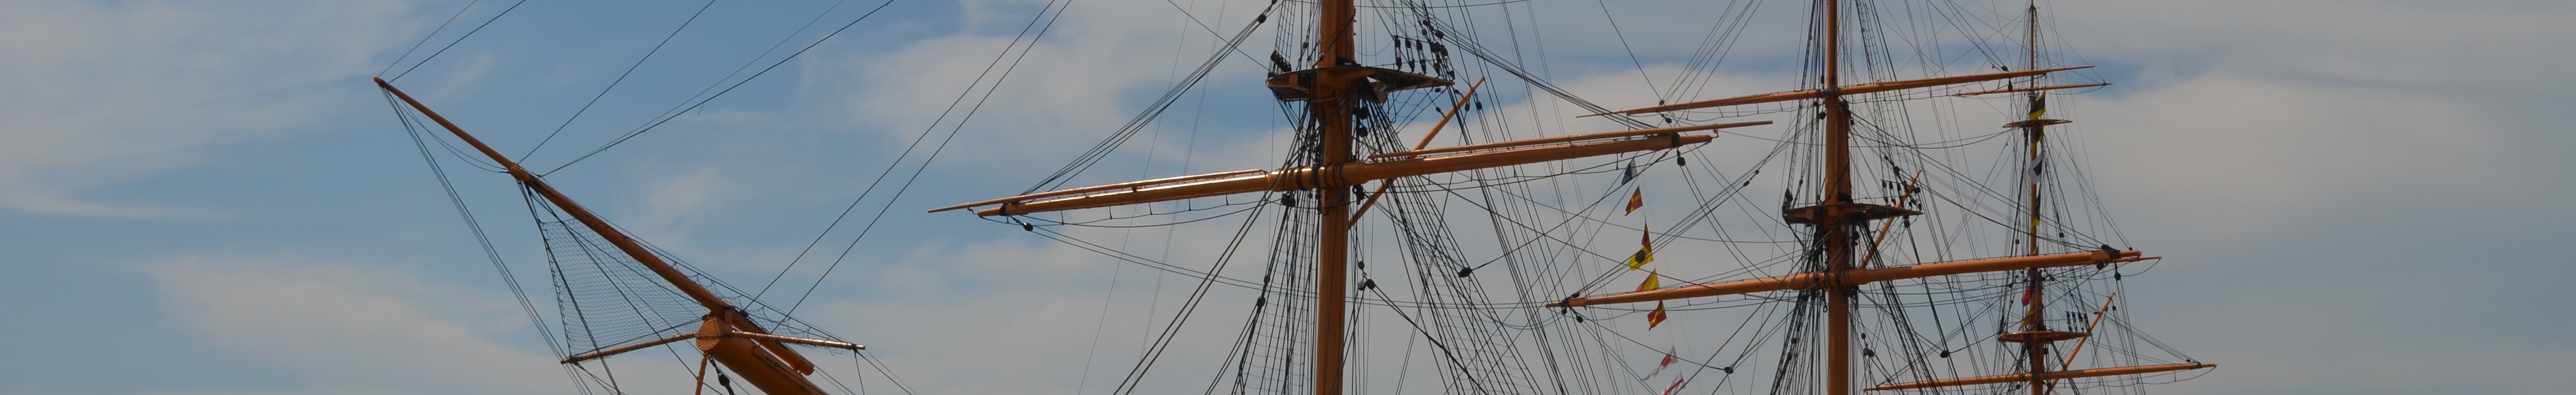 Masts of HMS Warrior 1860